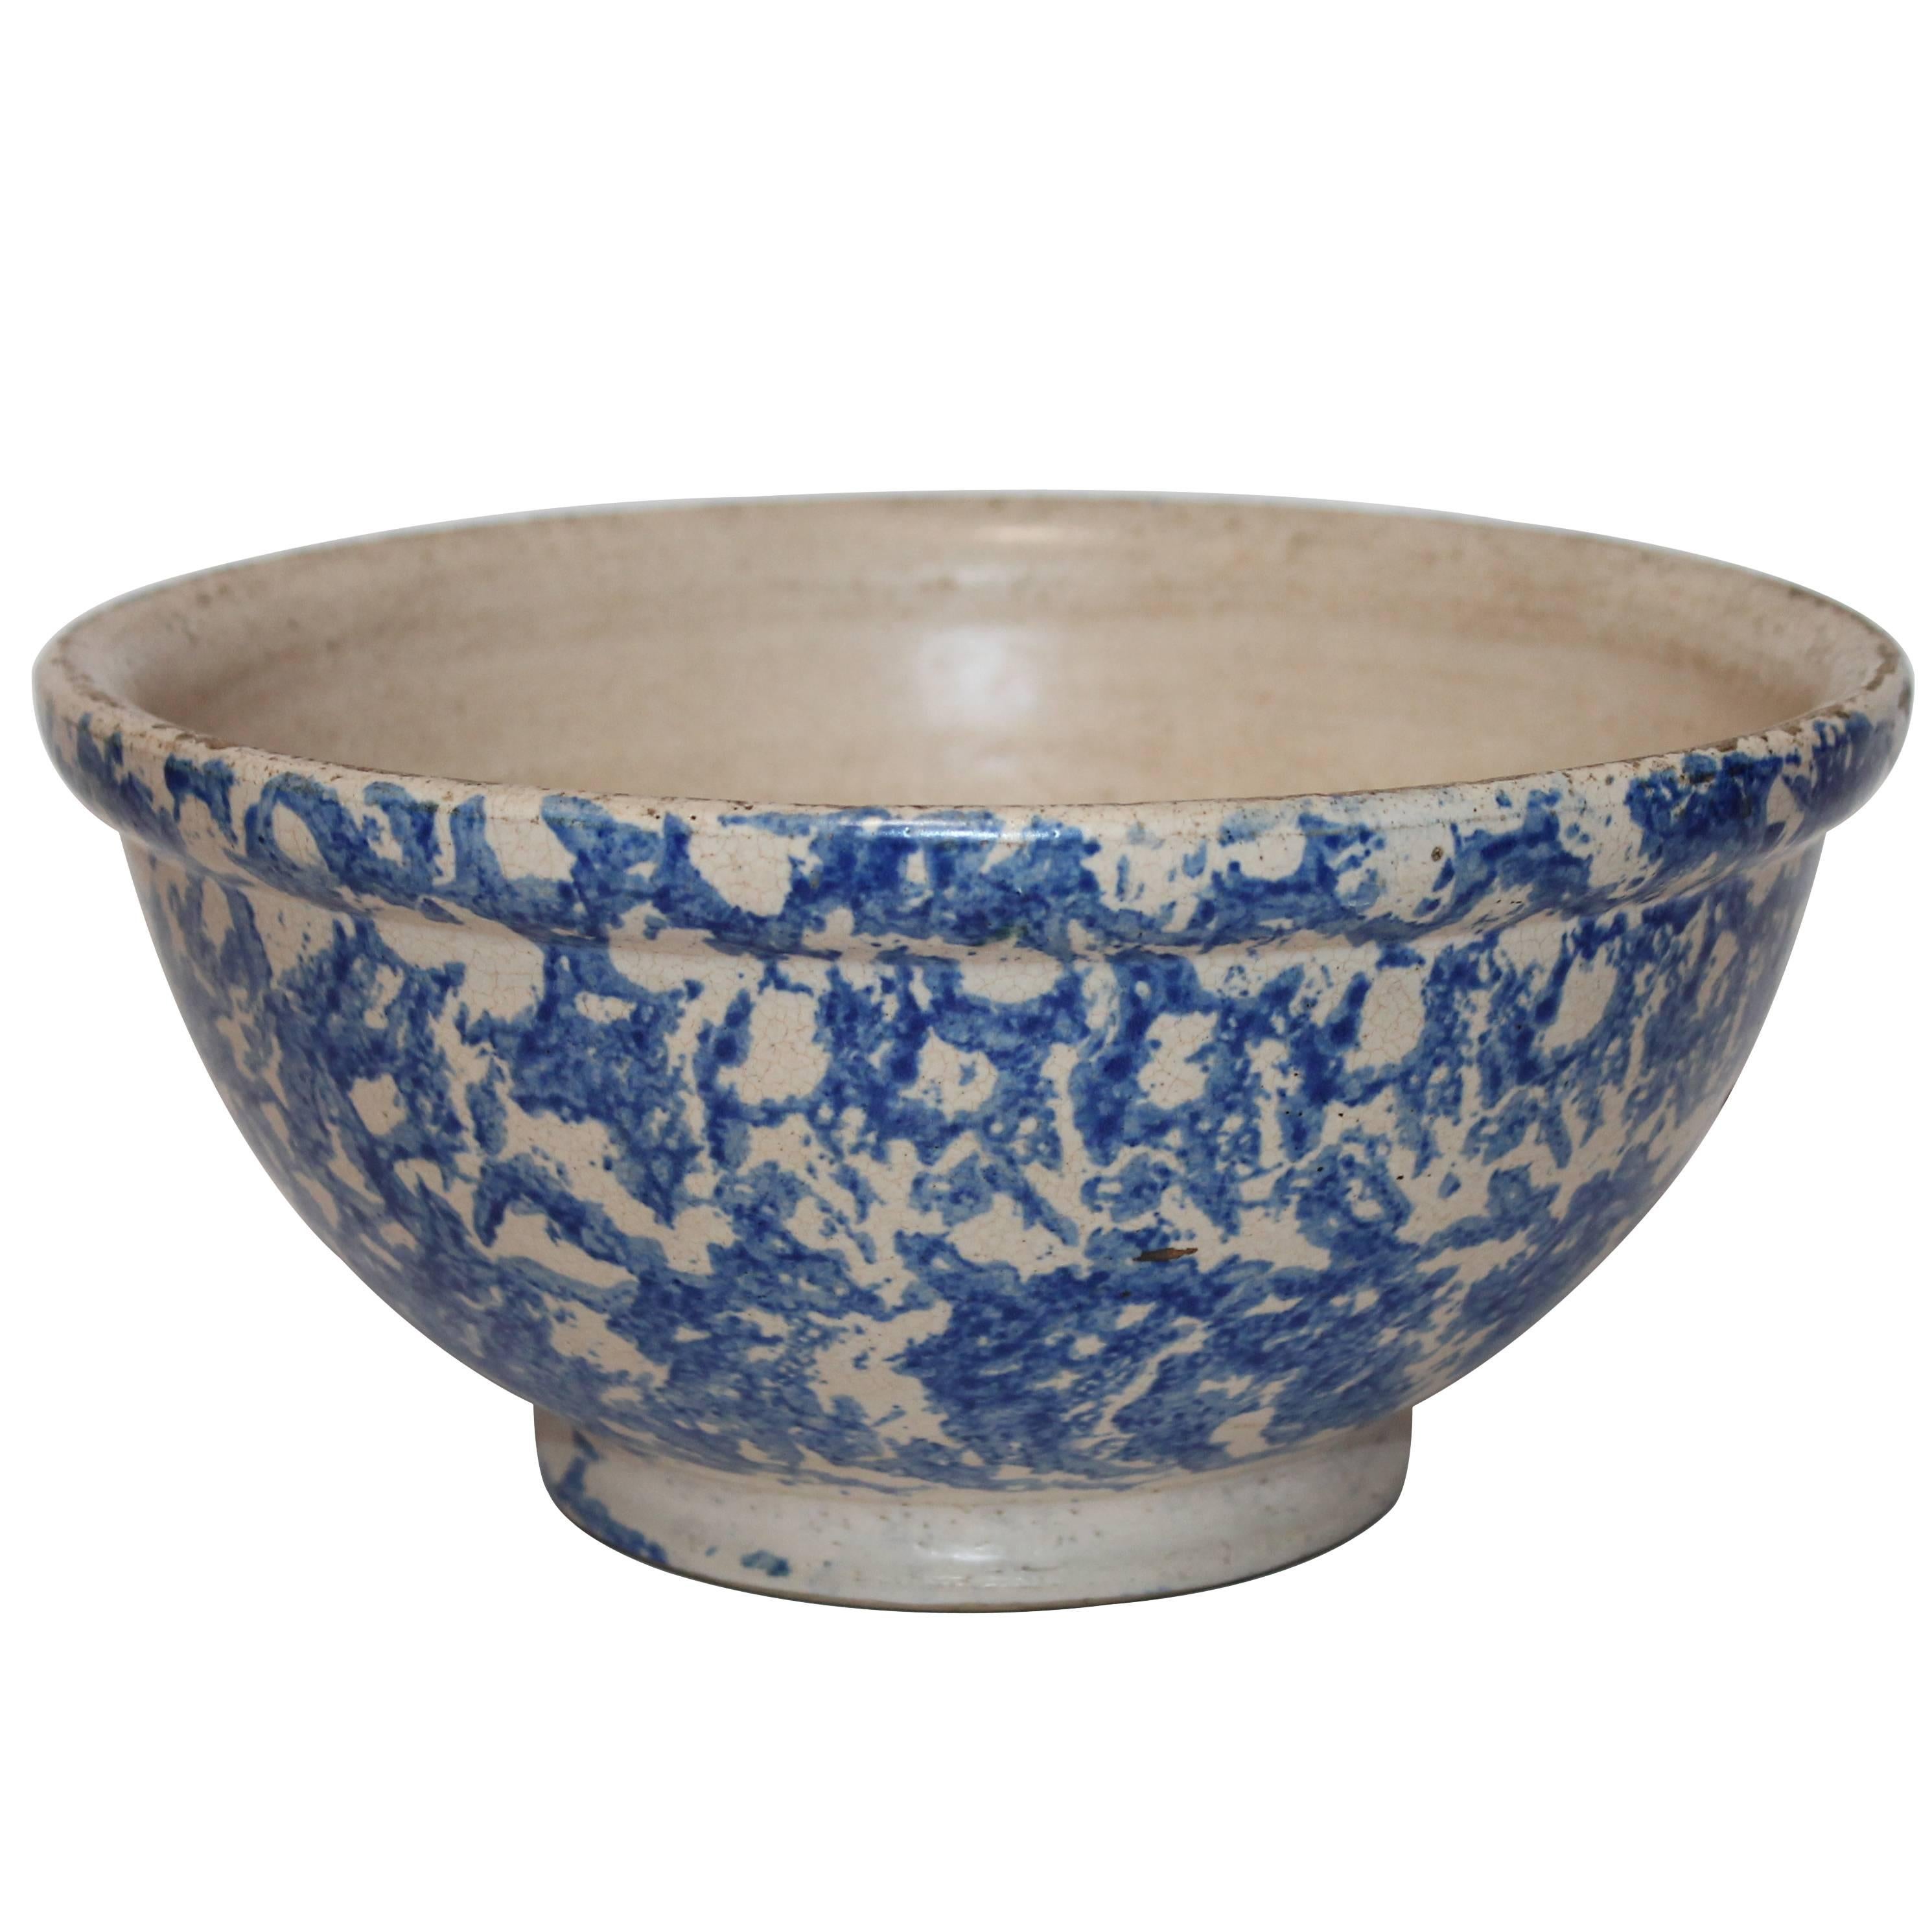 Rare and Unusual Signed Elsinore Pottery Spongeware Bowl